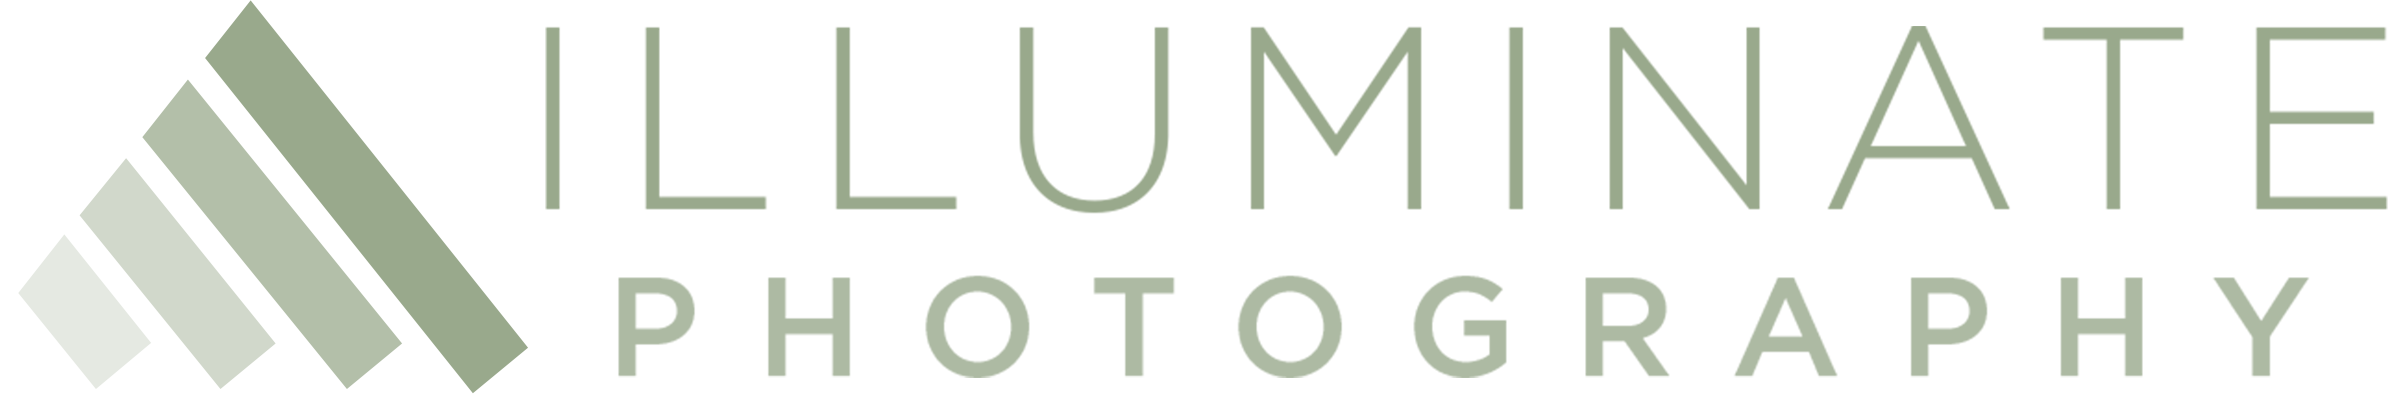 Illuminate Logo wide and high